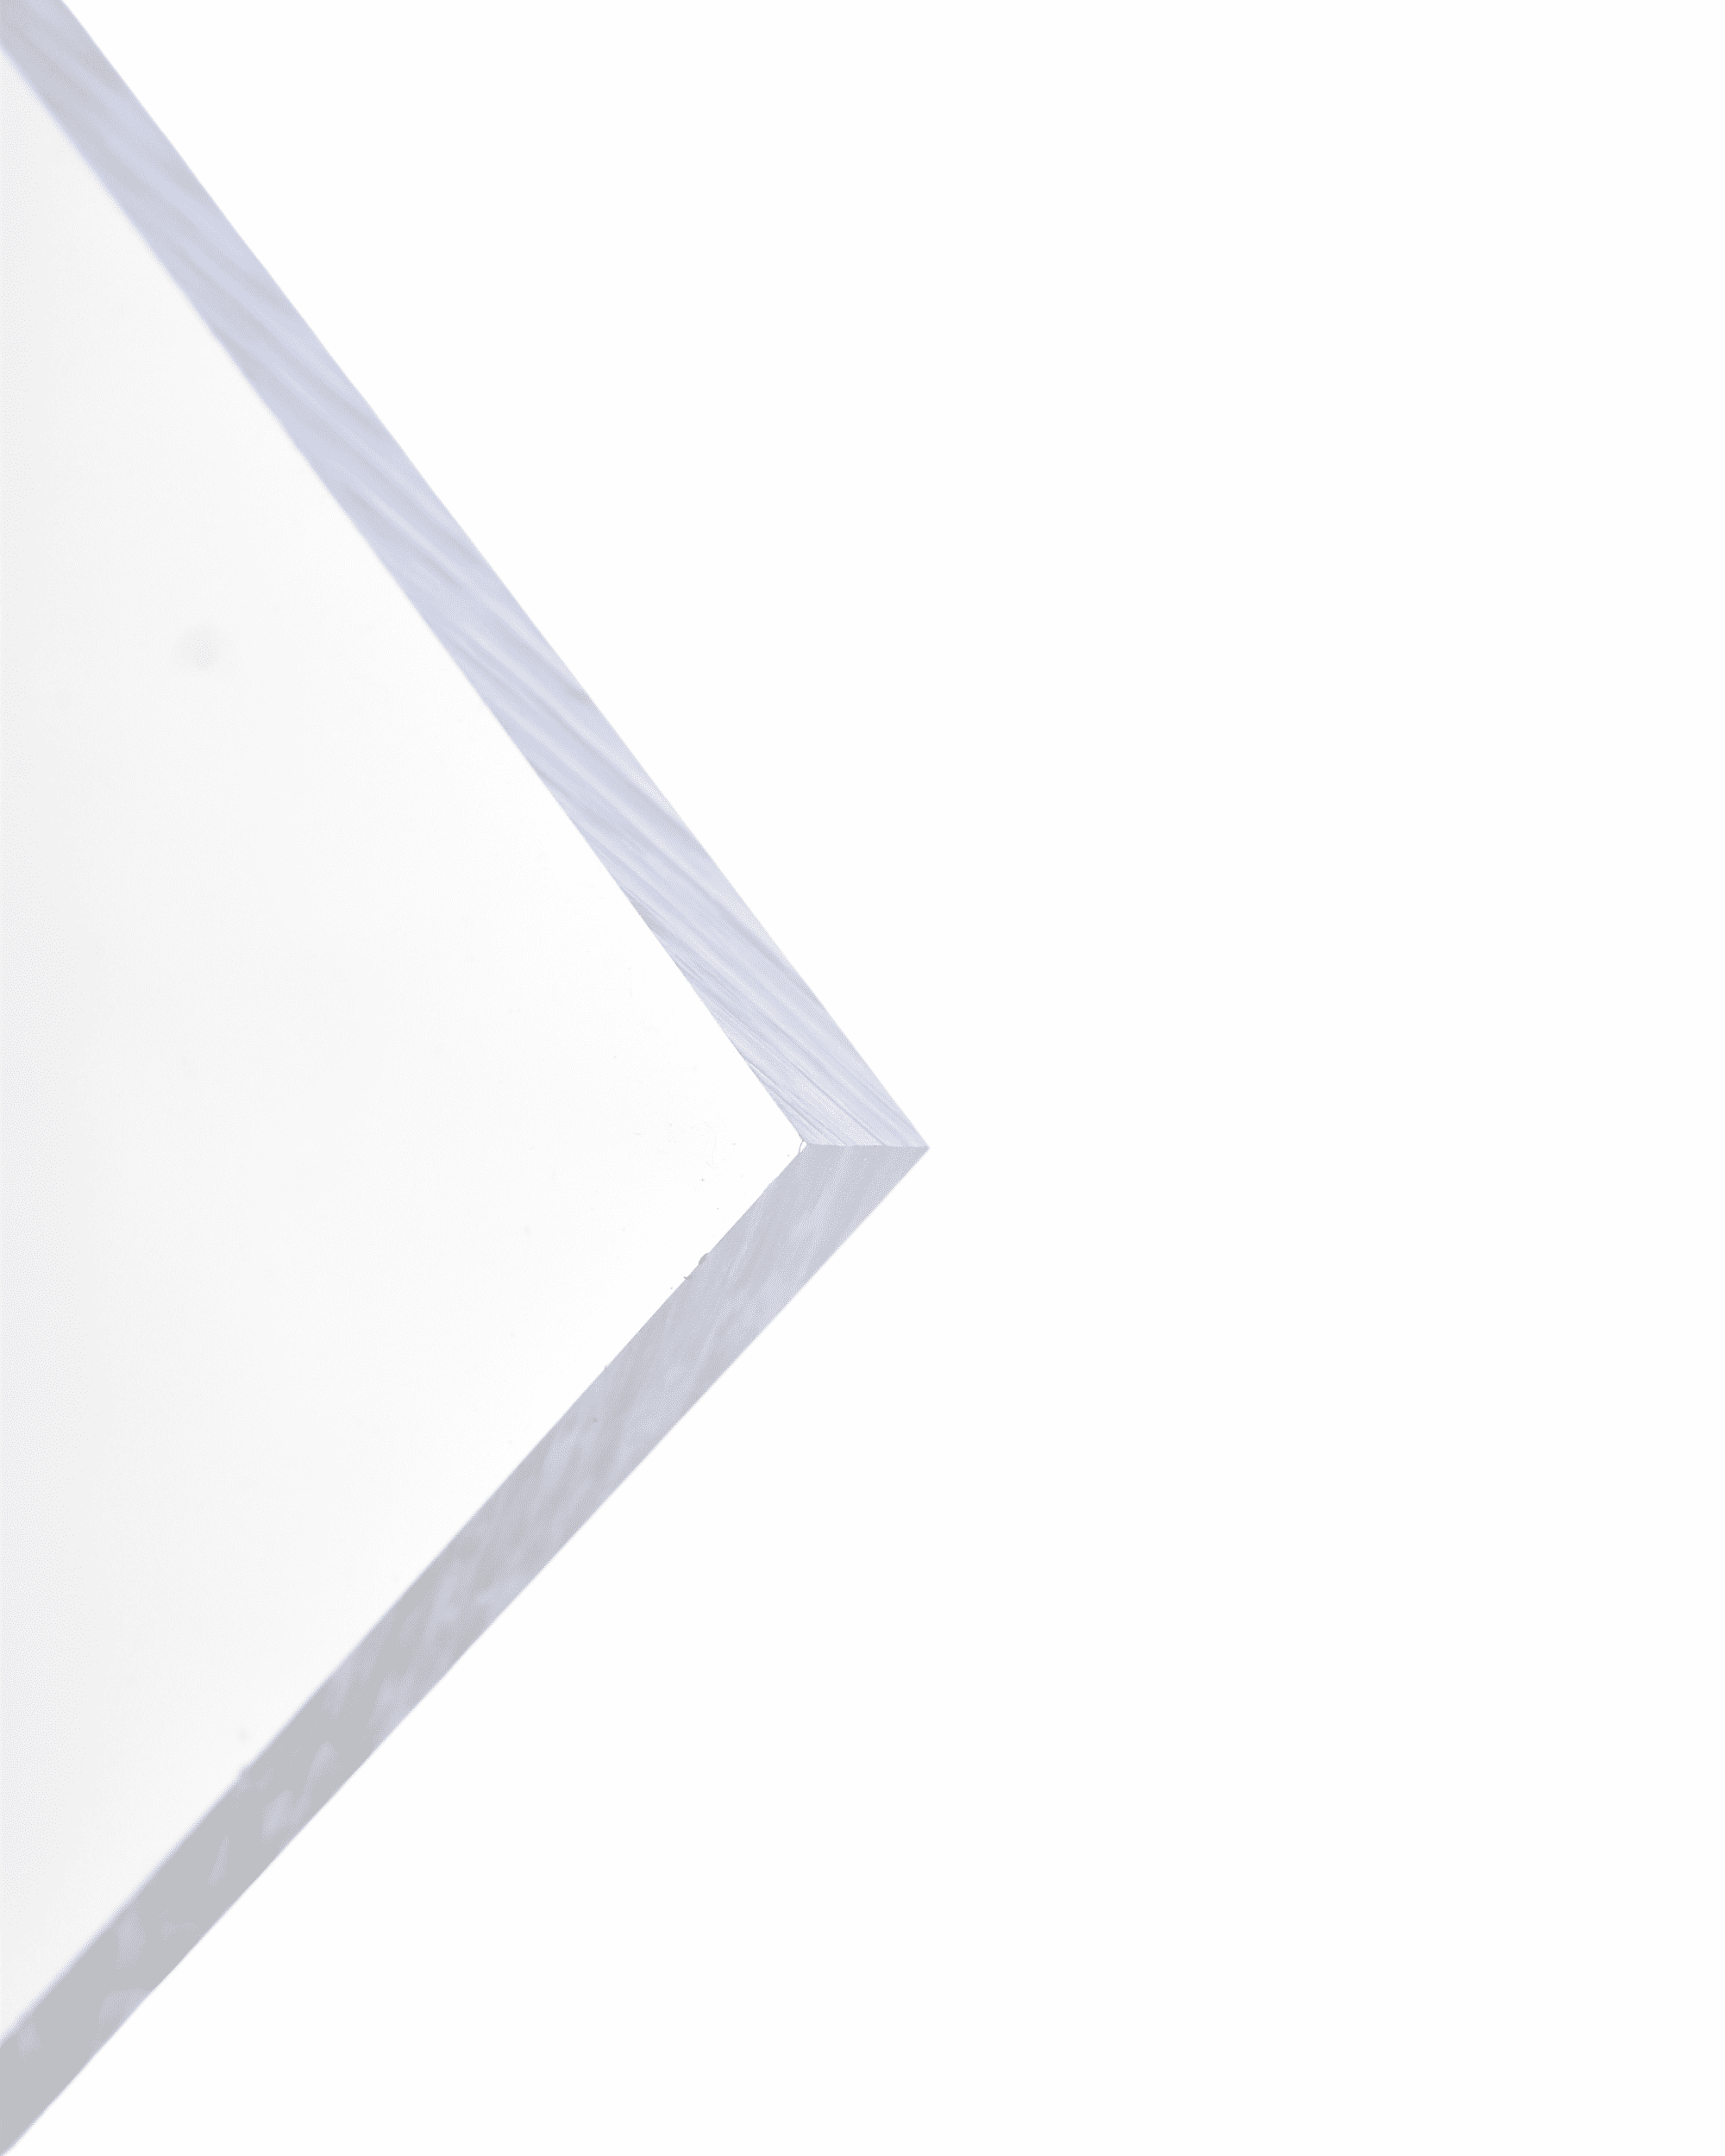 Acrylic Sheet 1/4" Clear Plexiglass 16" x 16" 